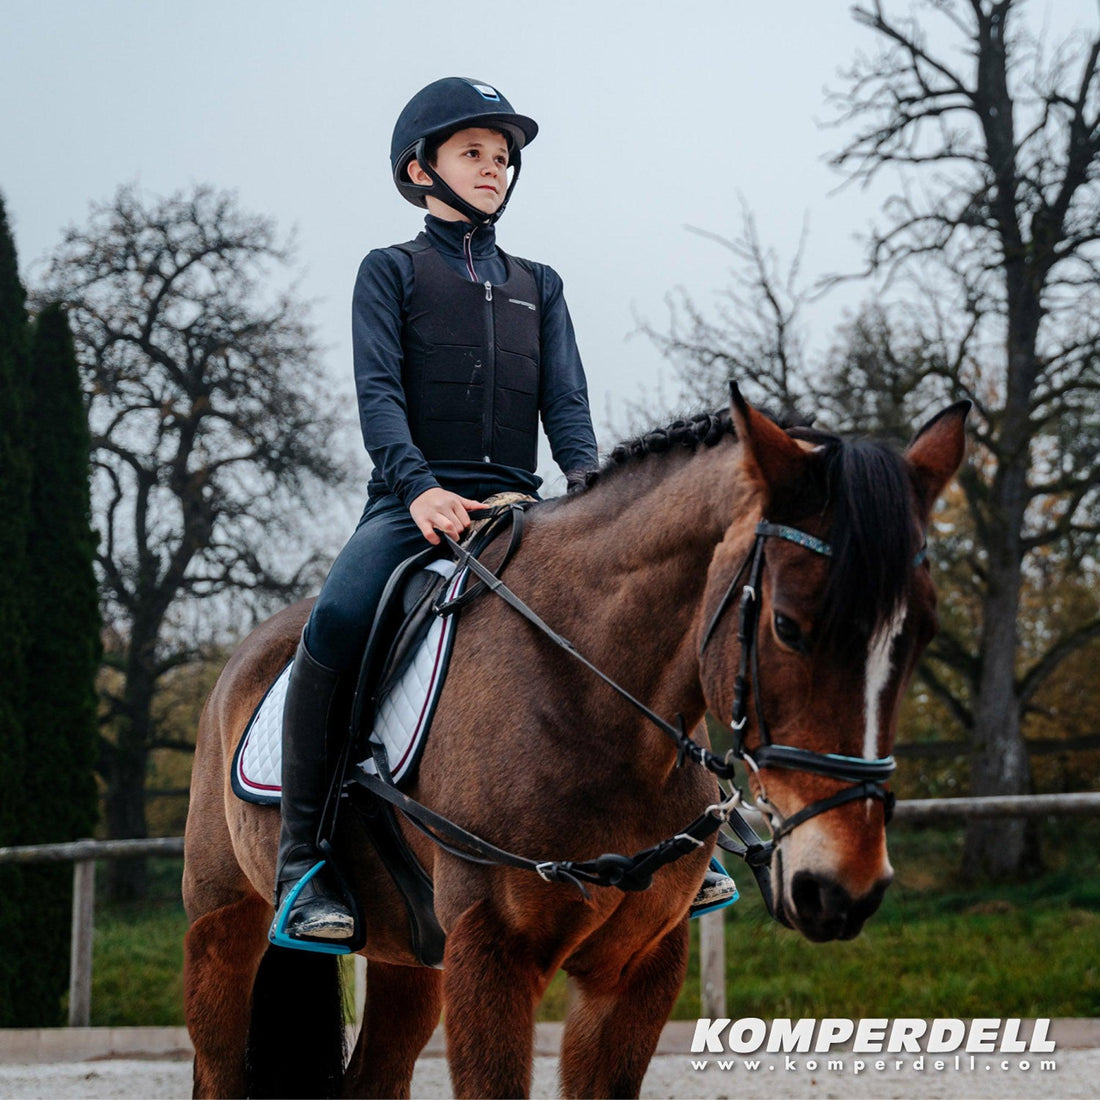 Komperdell ballistic vest Champion - K6460-229 - HorseworldEU